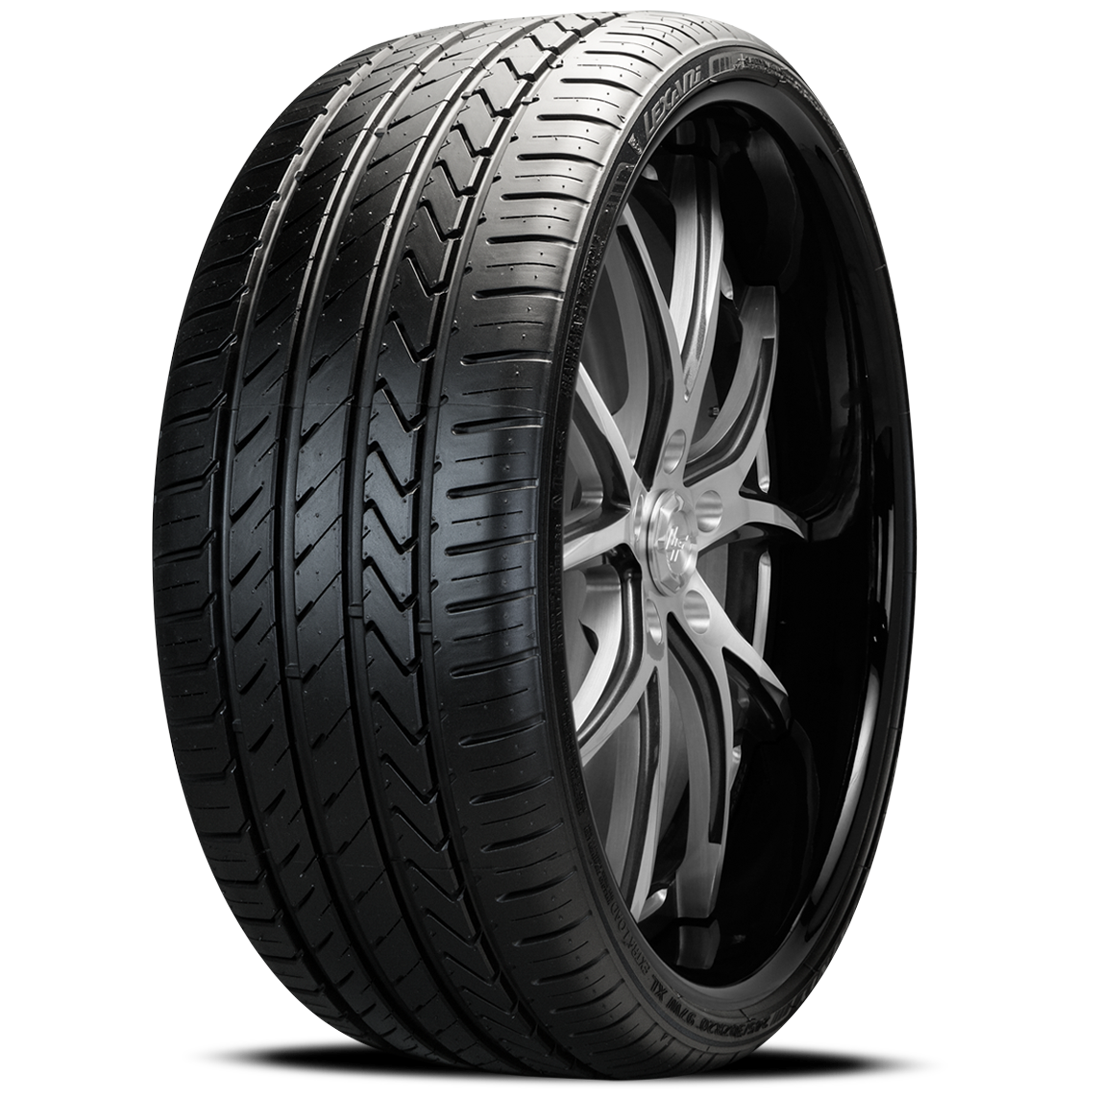 LEXANI LX-TWENTY 275/30ZR19 (25.6X10.9R 19) Tires